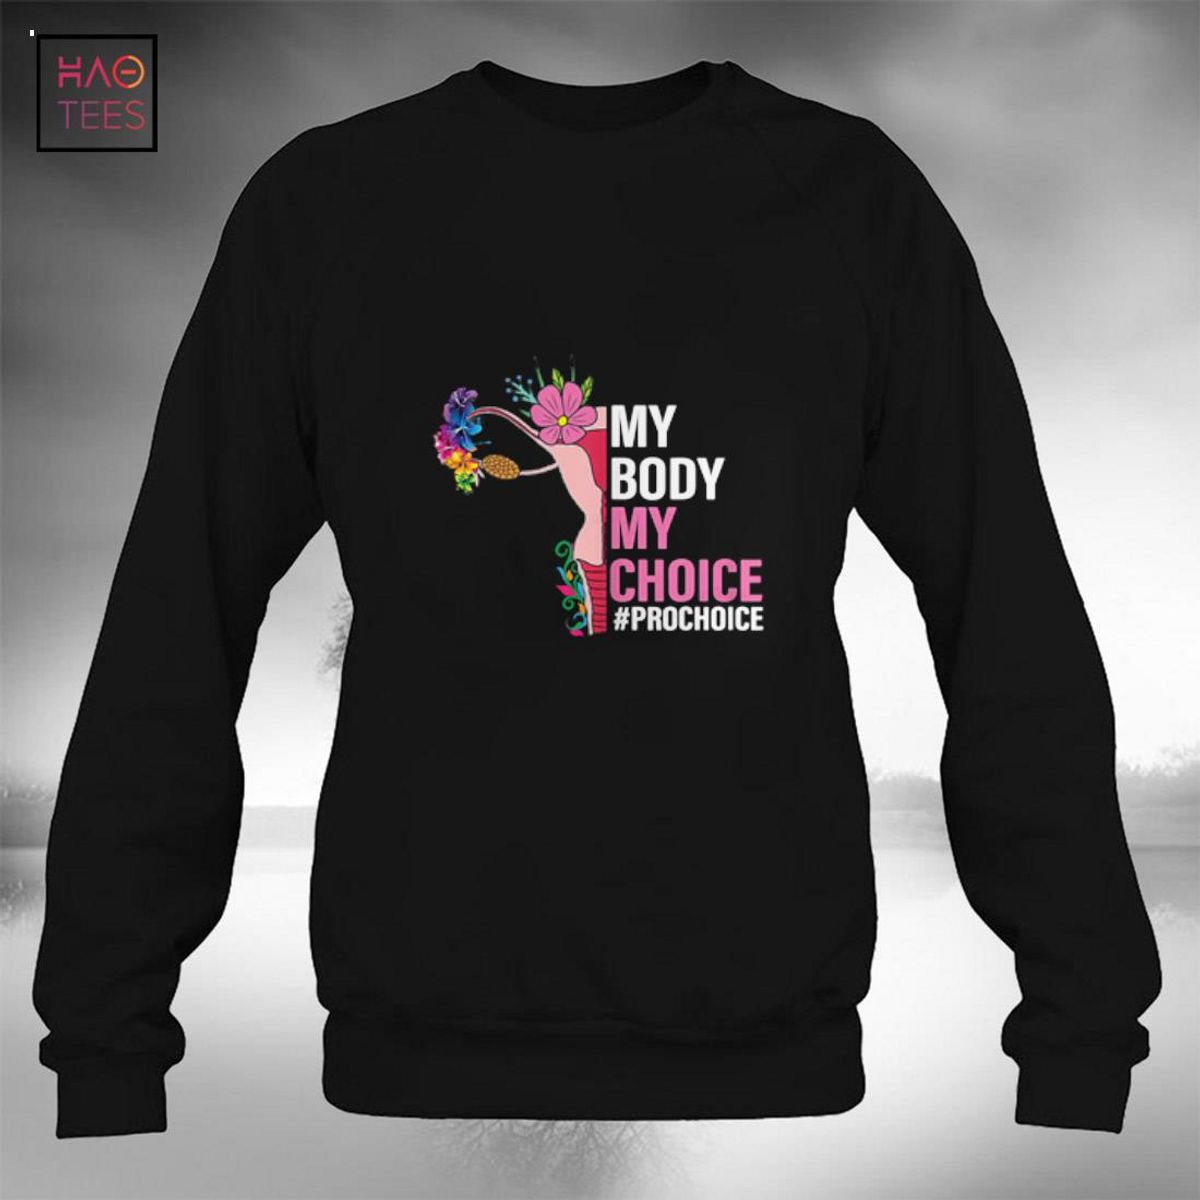 Womens My Body My Choice  prochoice Pro Choice Feminist Shirt